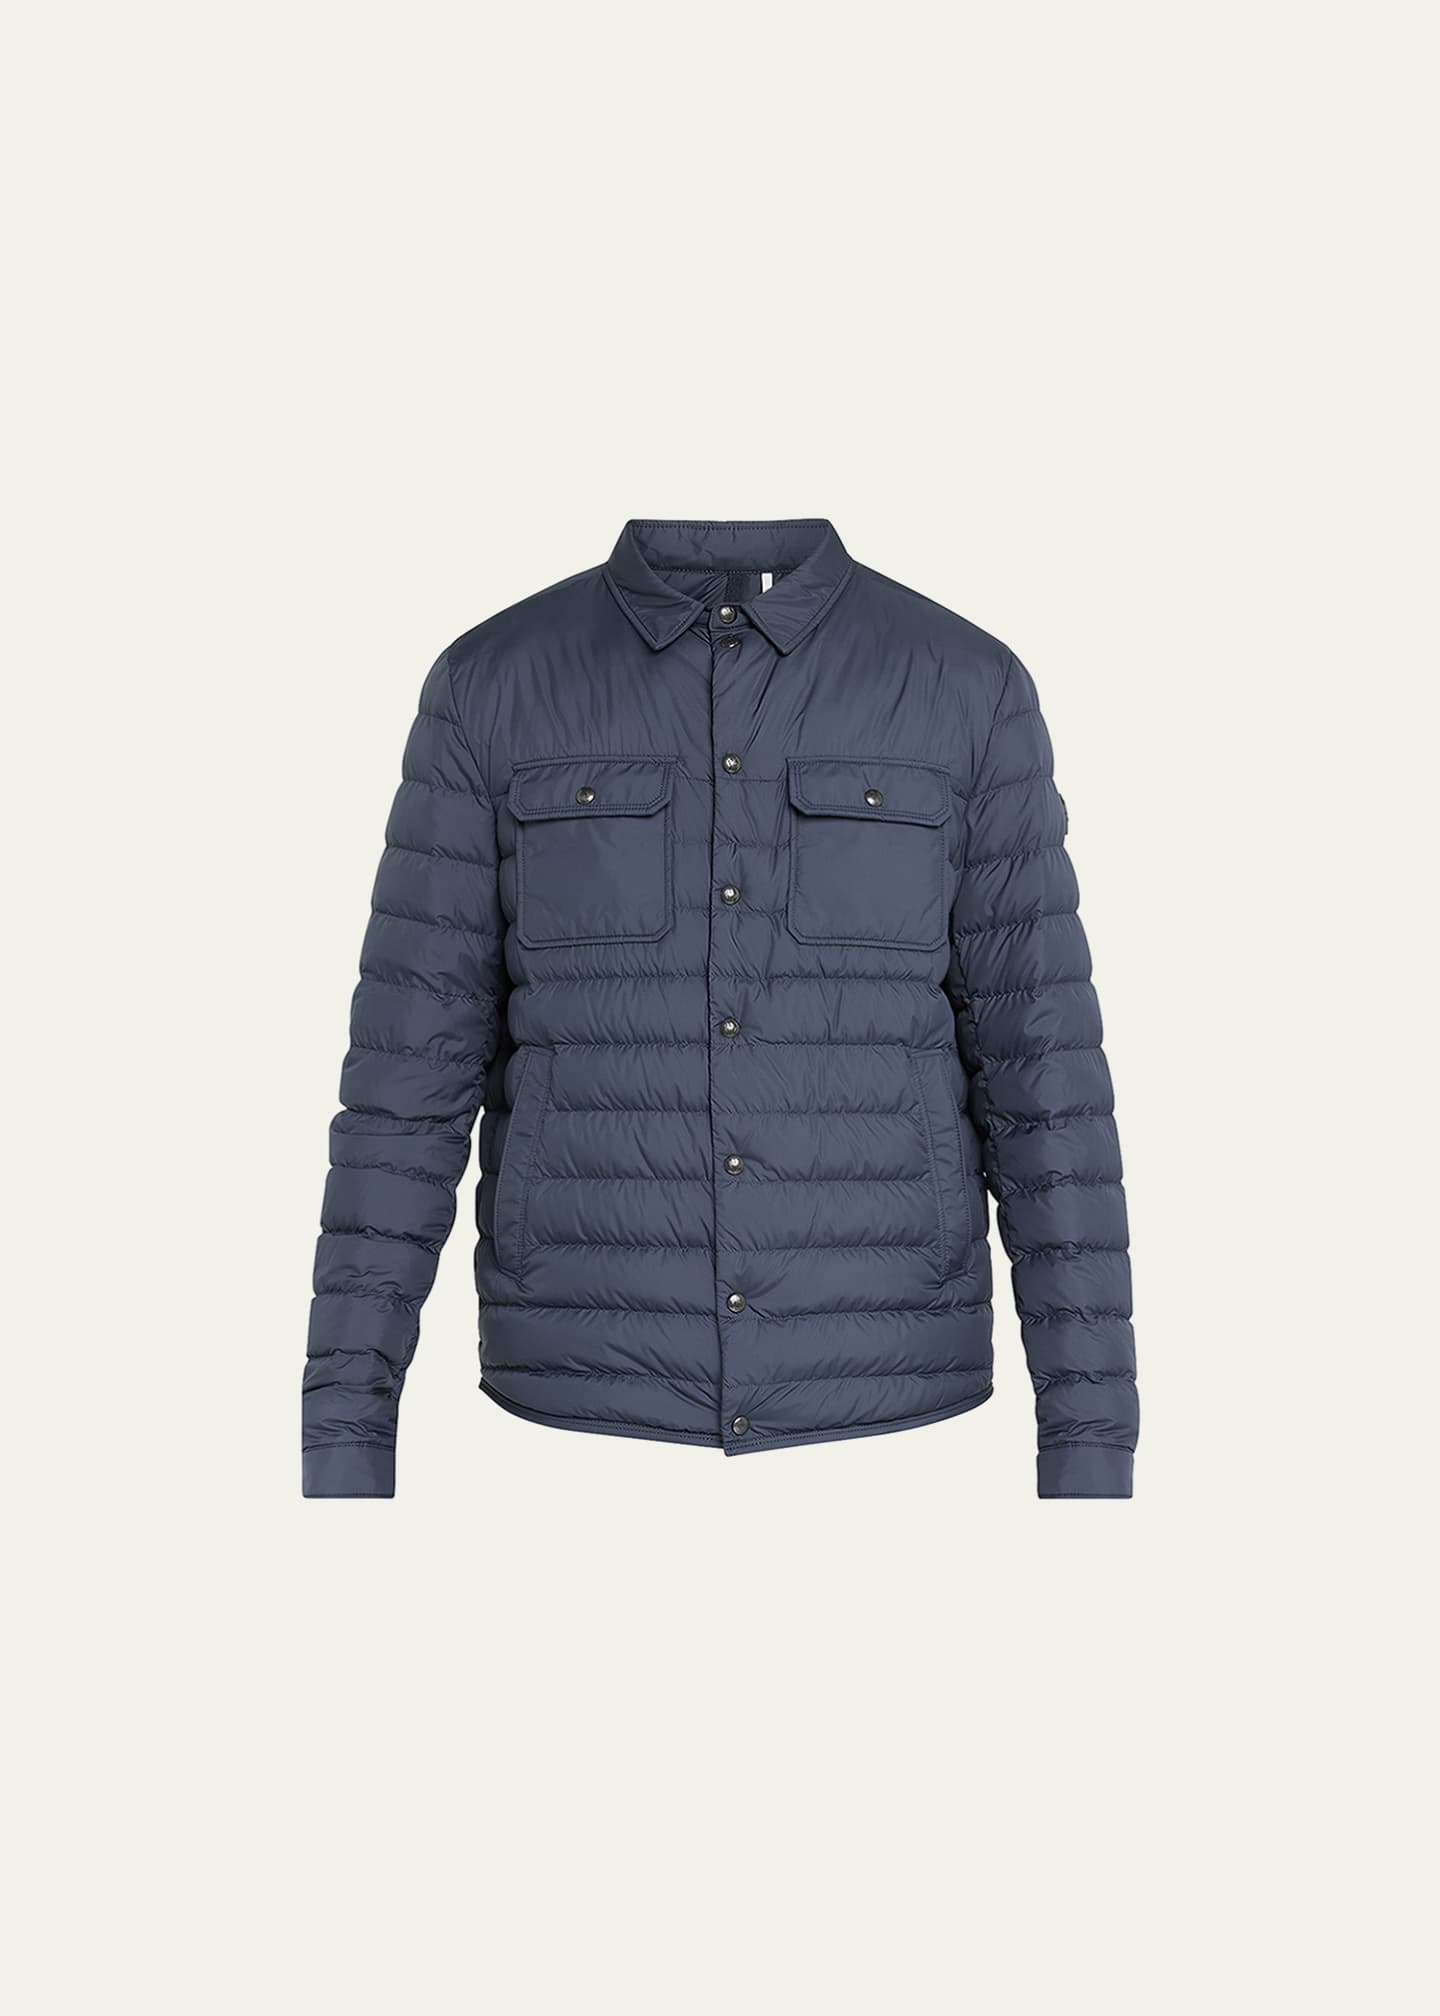 Moncler Men's Sanary Quilted Down Shirt Jacket - Bergdorf Goodman